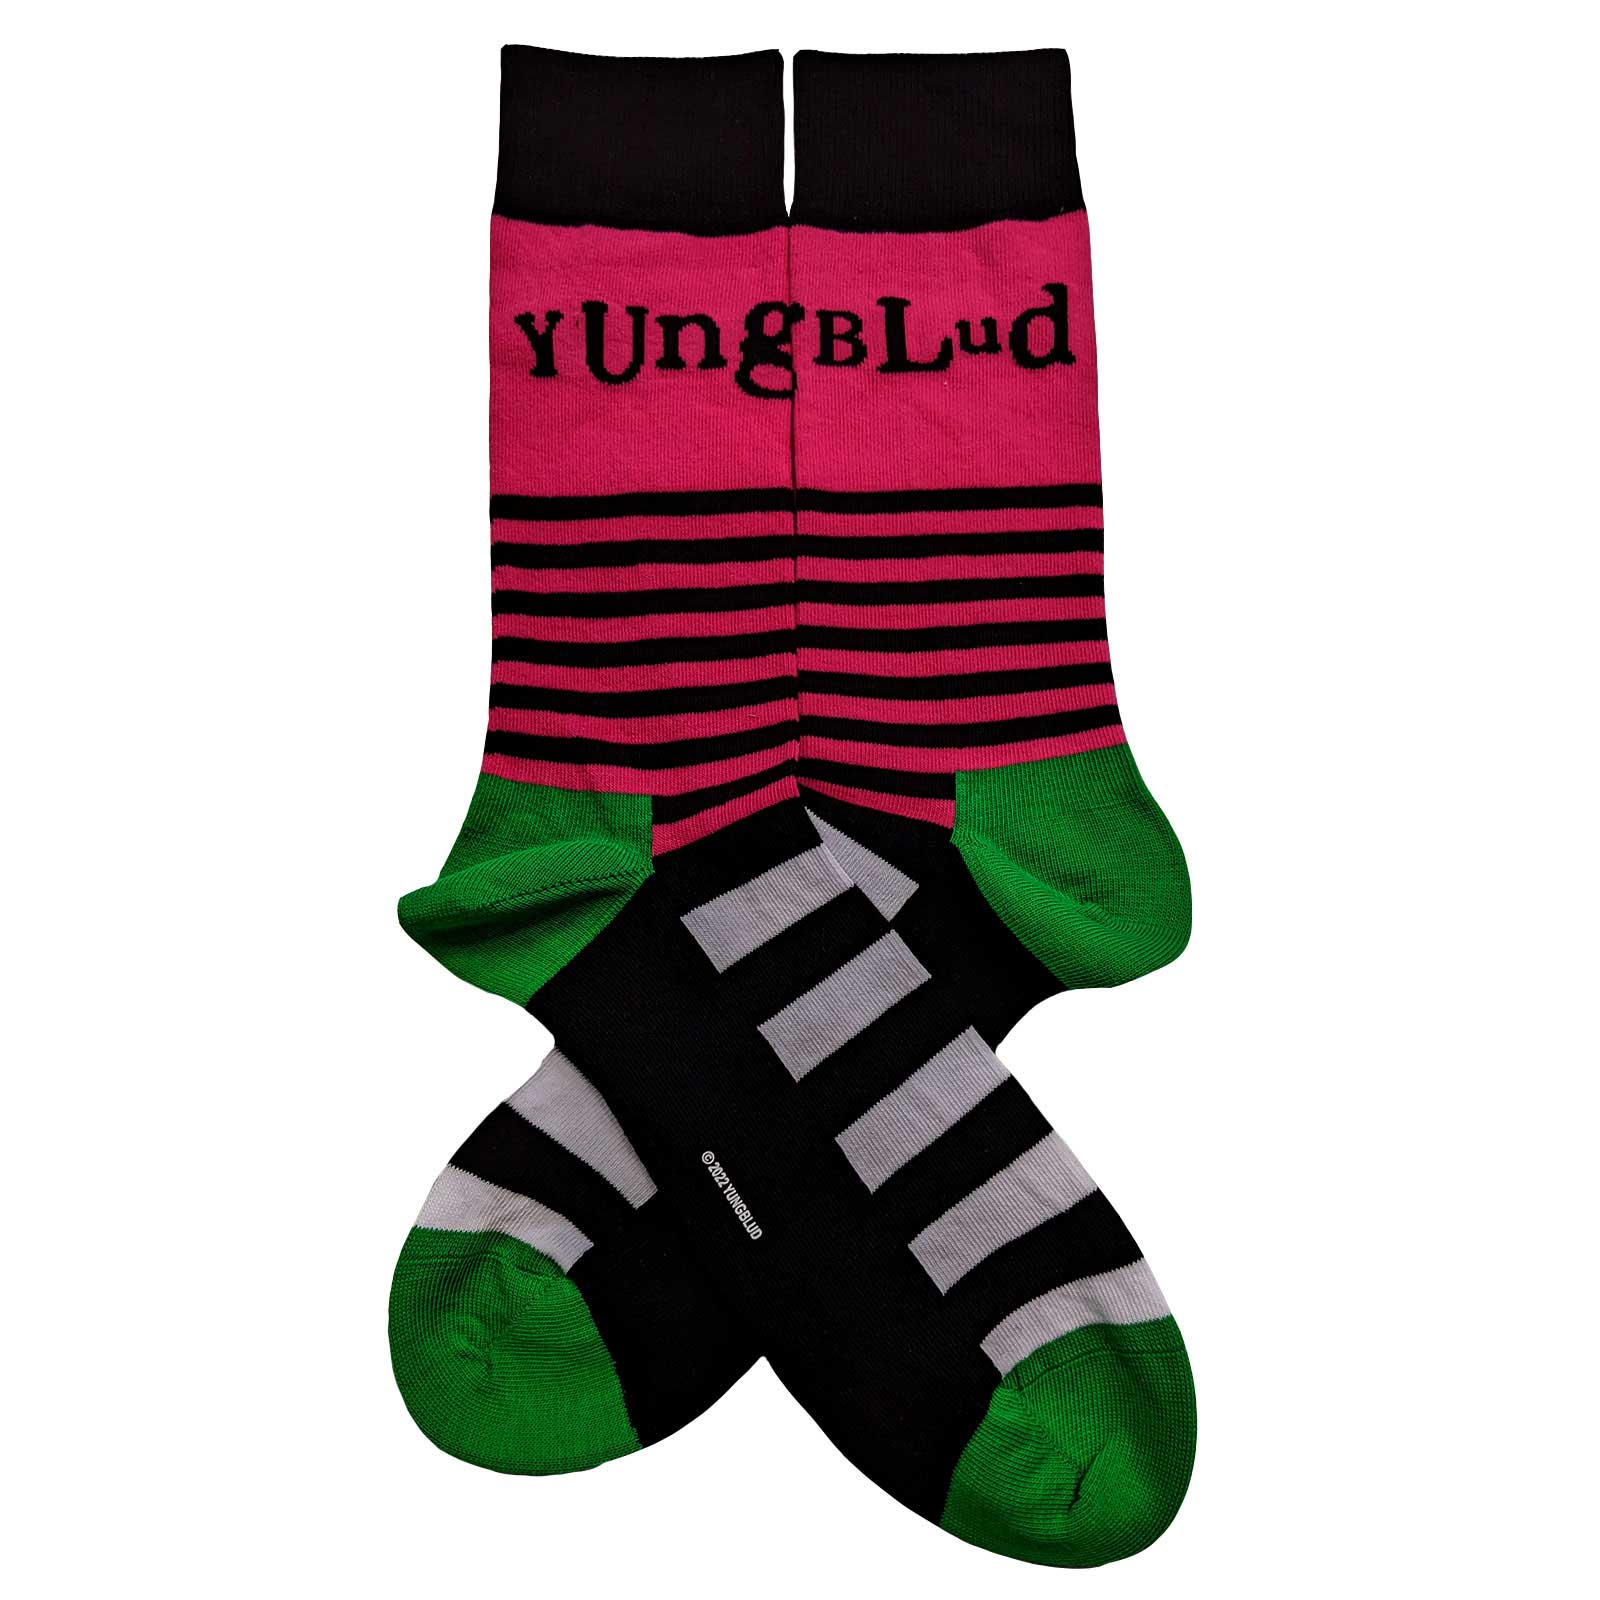 Name:Yungblud_Logo & Stripes_Unisex_Black_Socks【ROCK OFF】【ネコポス選択可能】